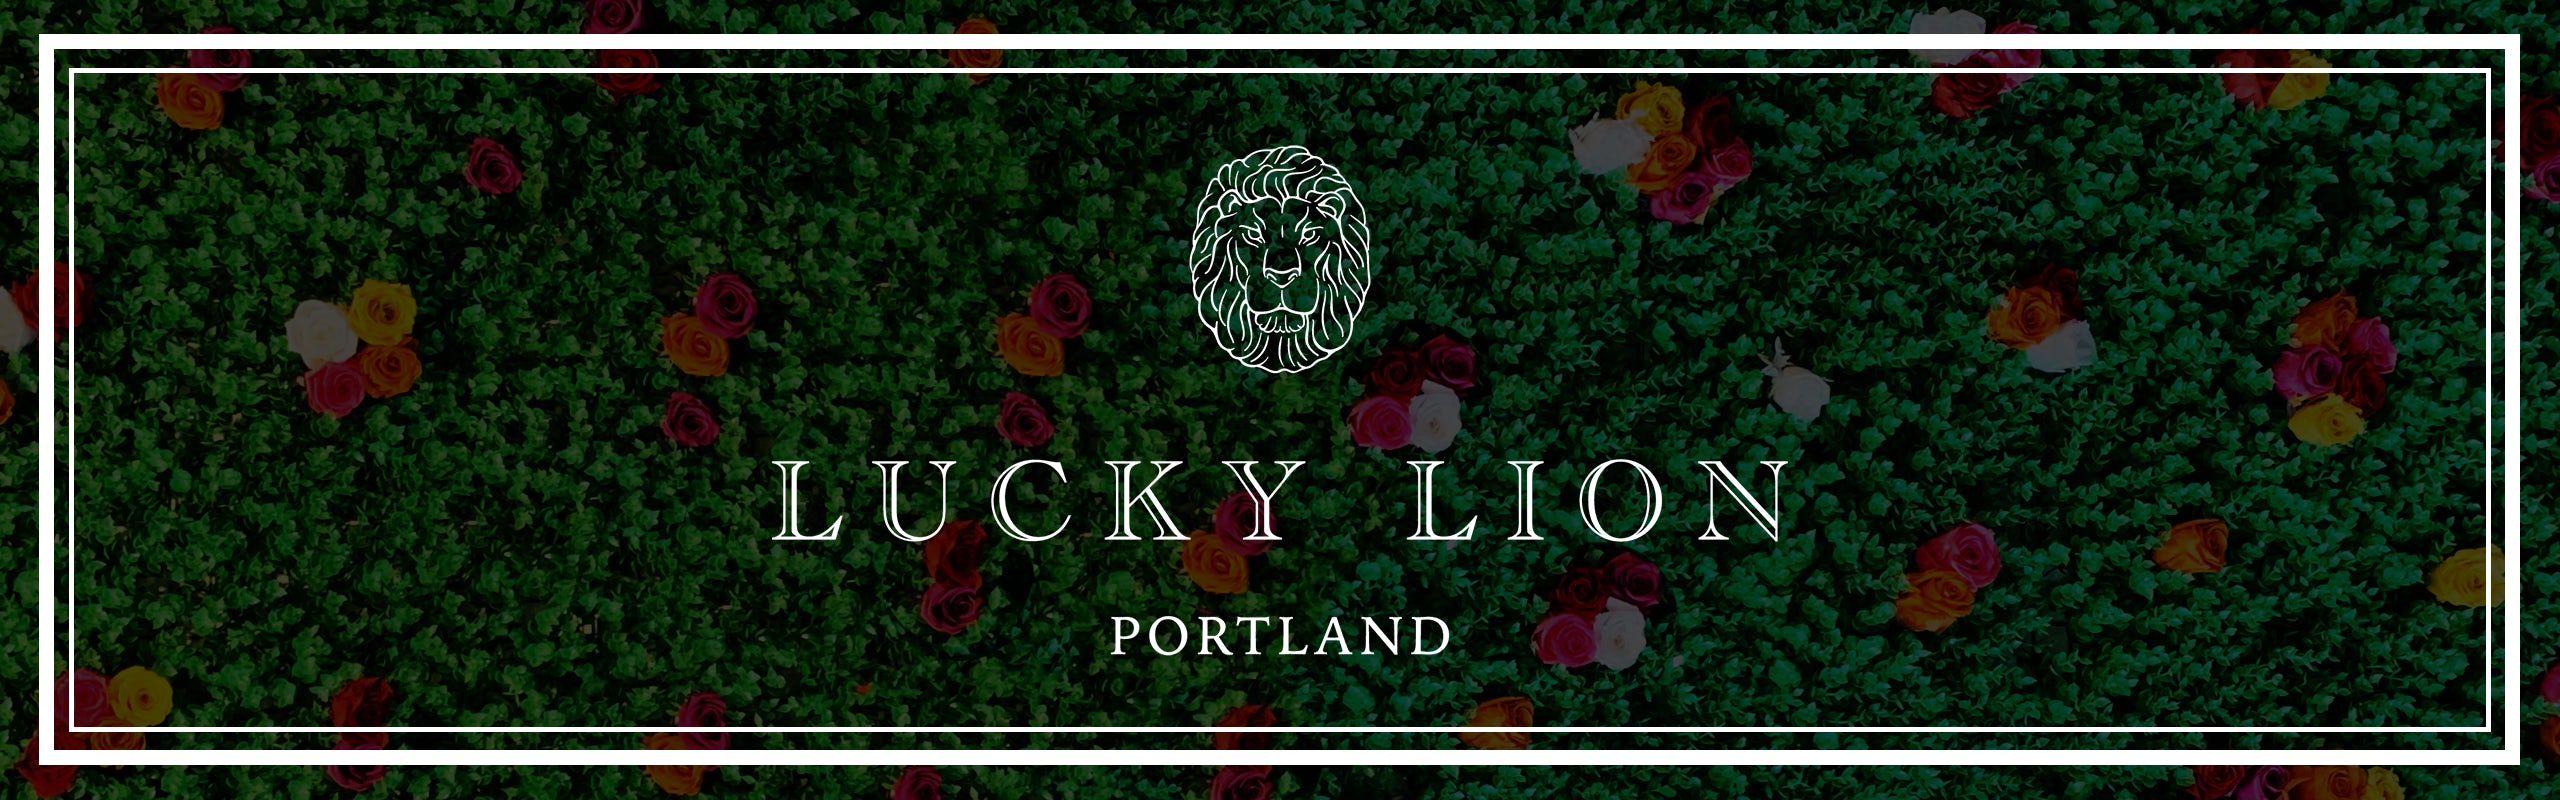 Lucky Lion banner